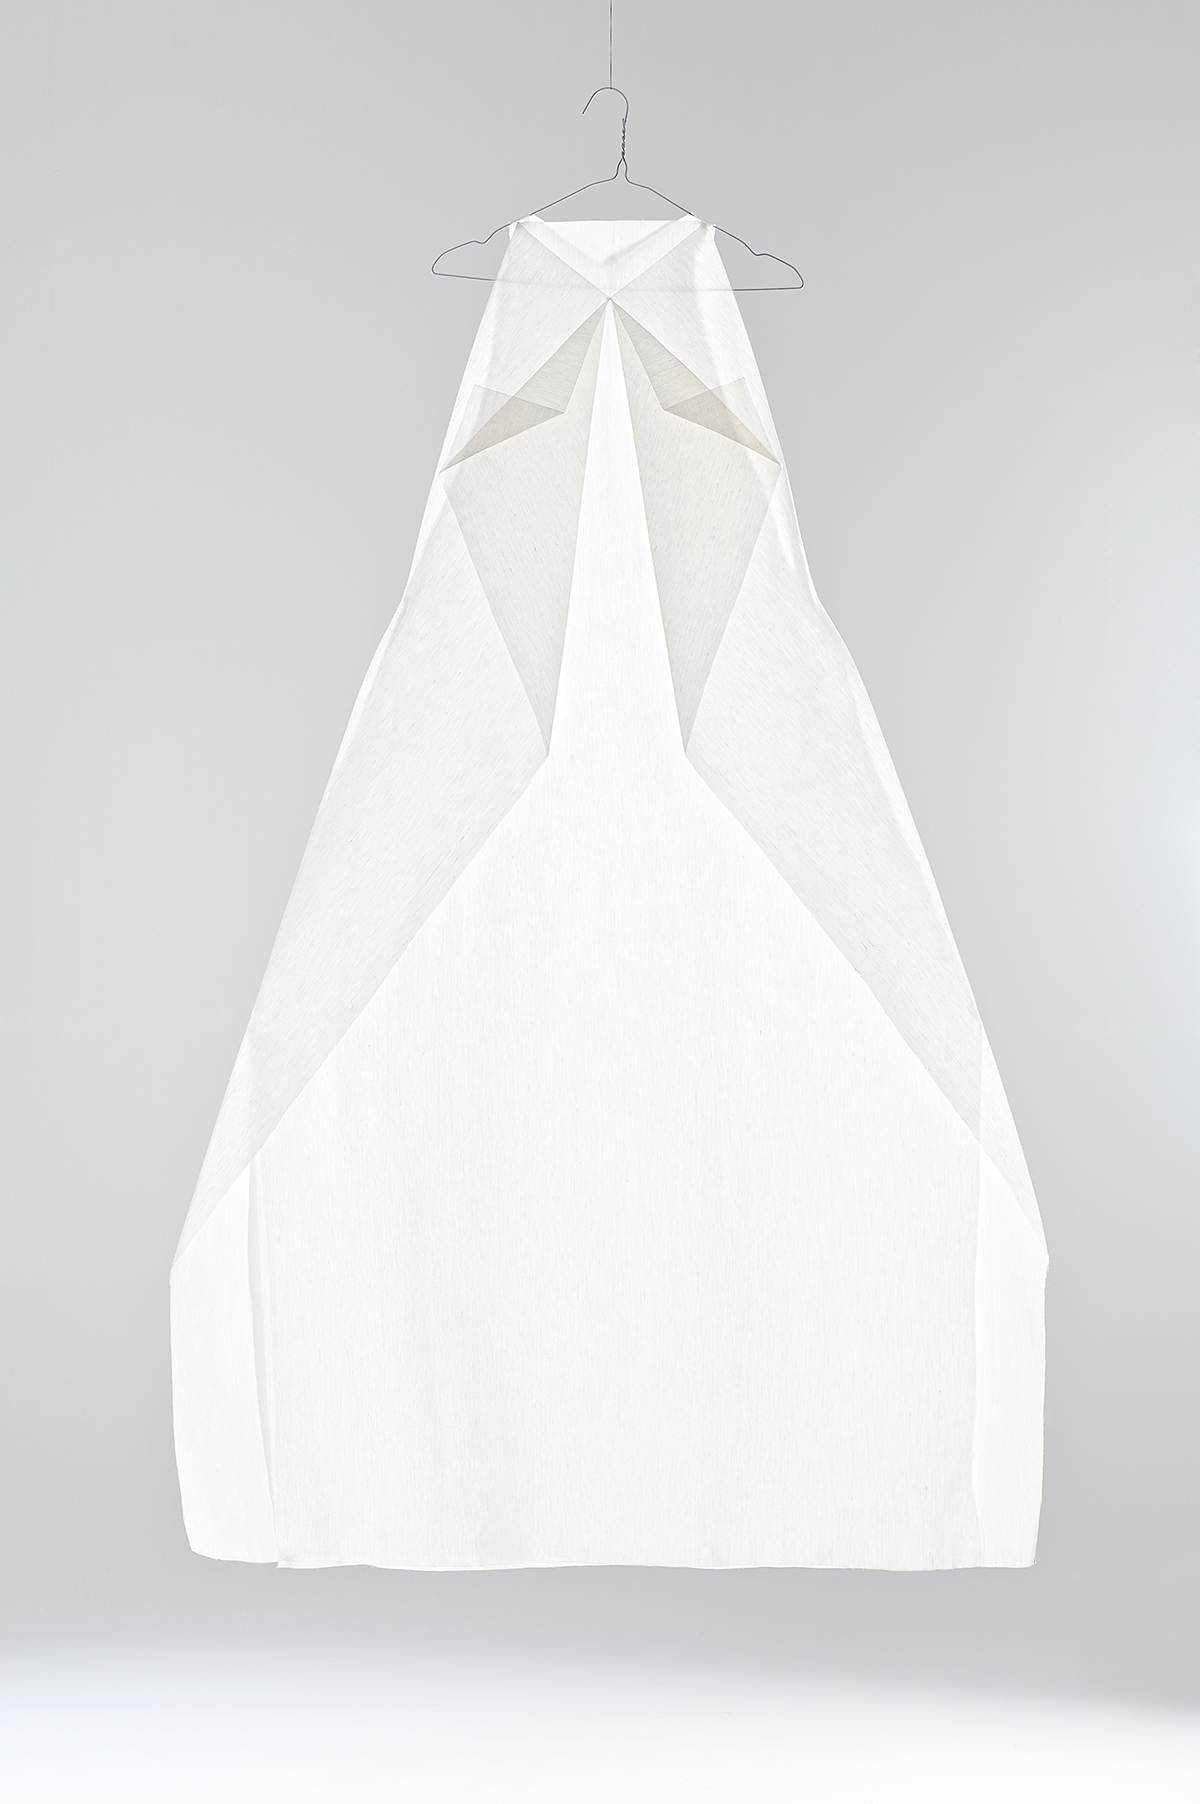 layers White dress angel light origami 